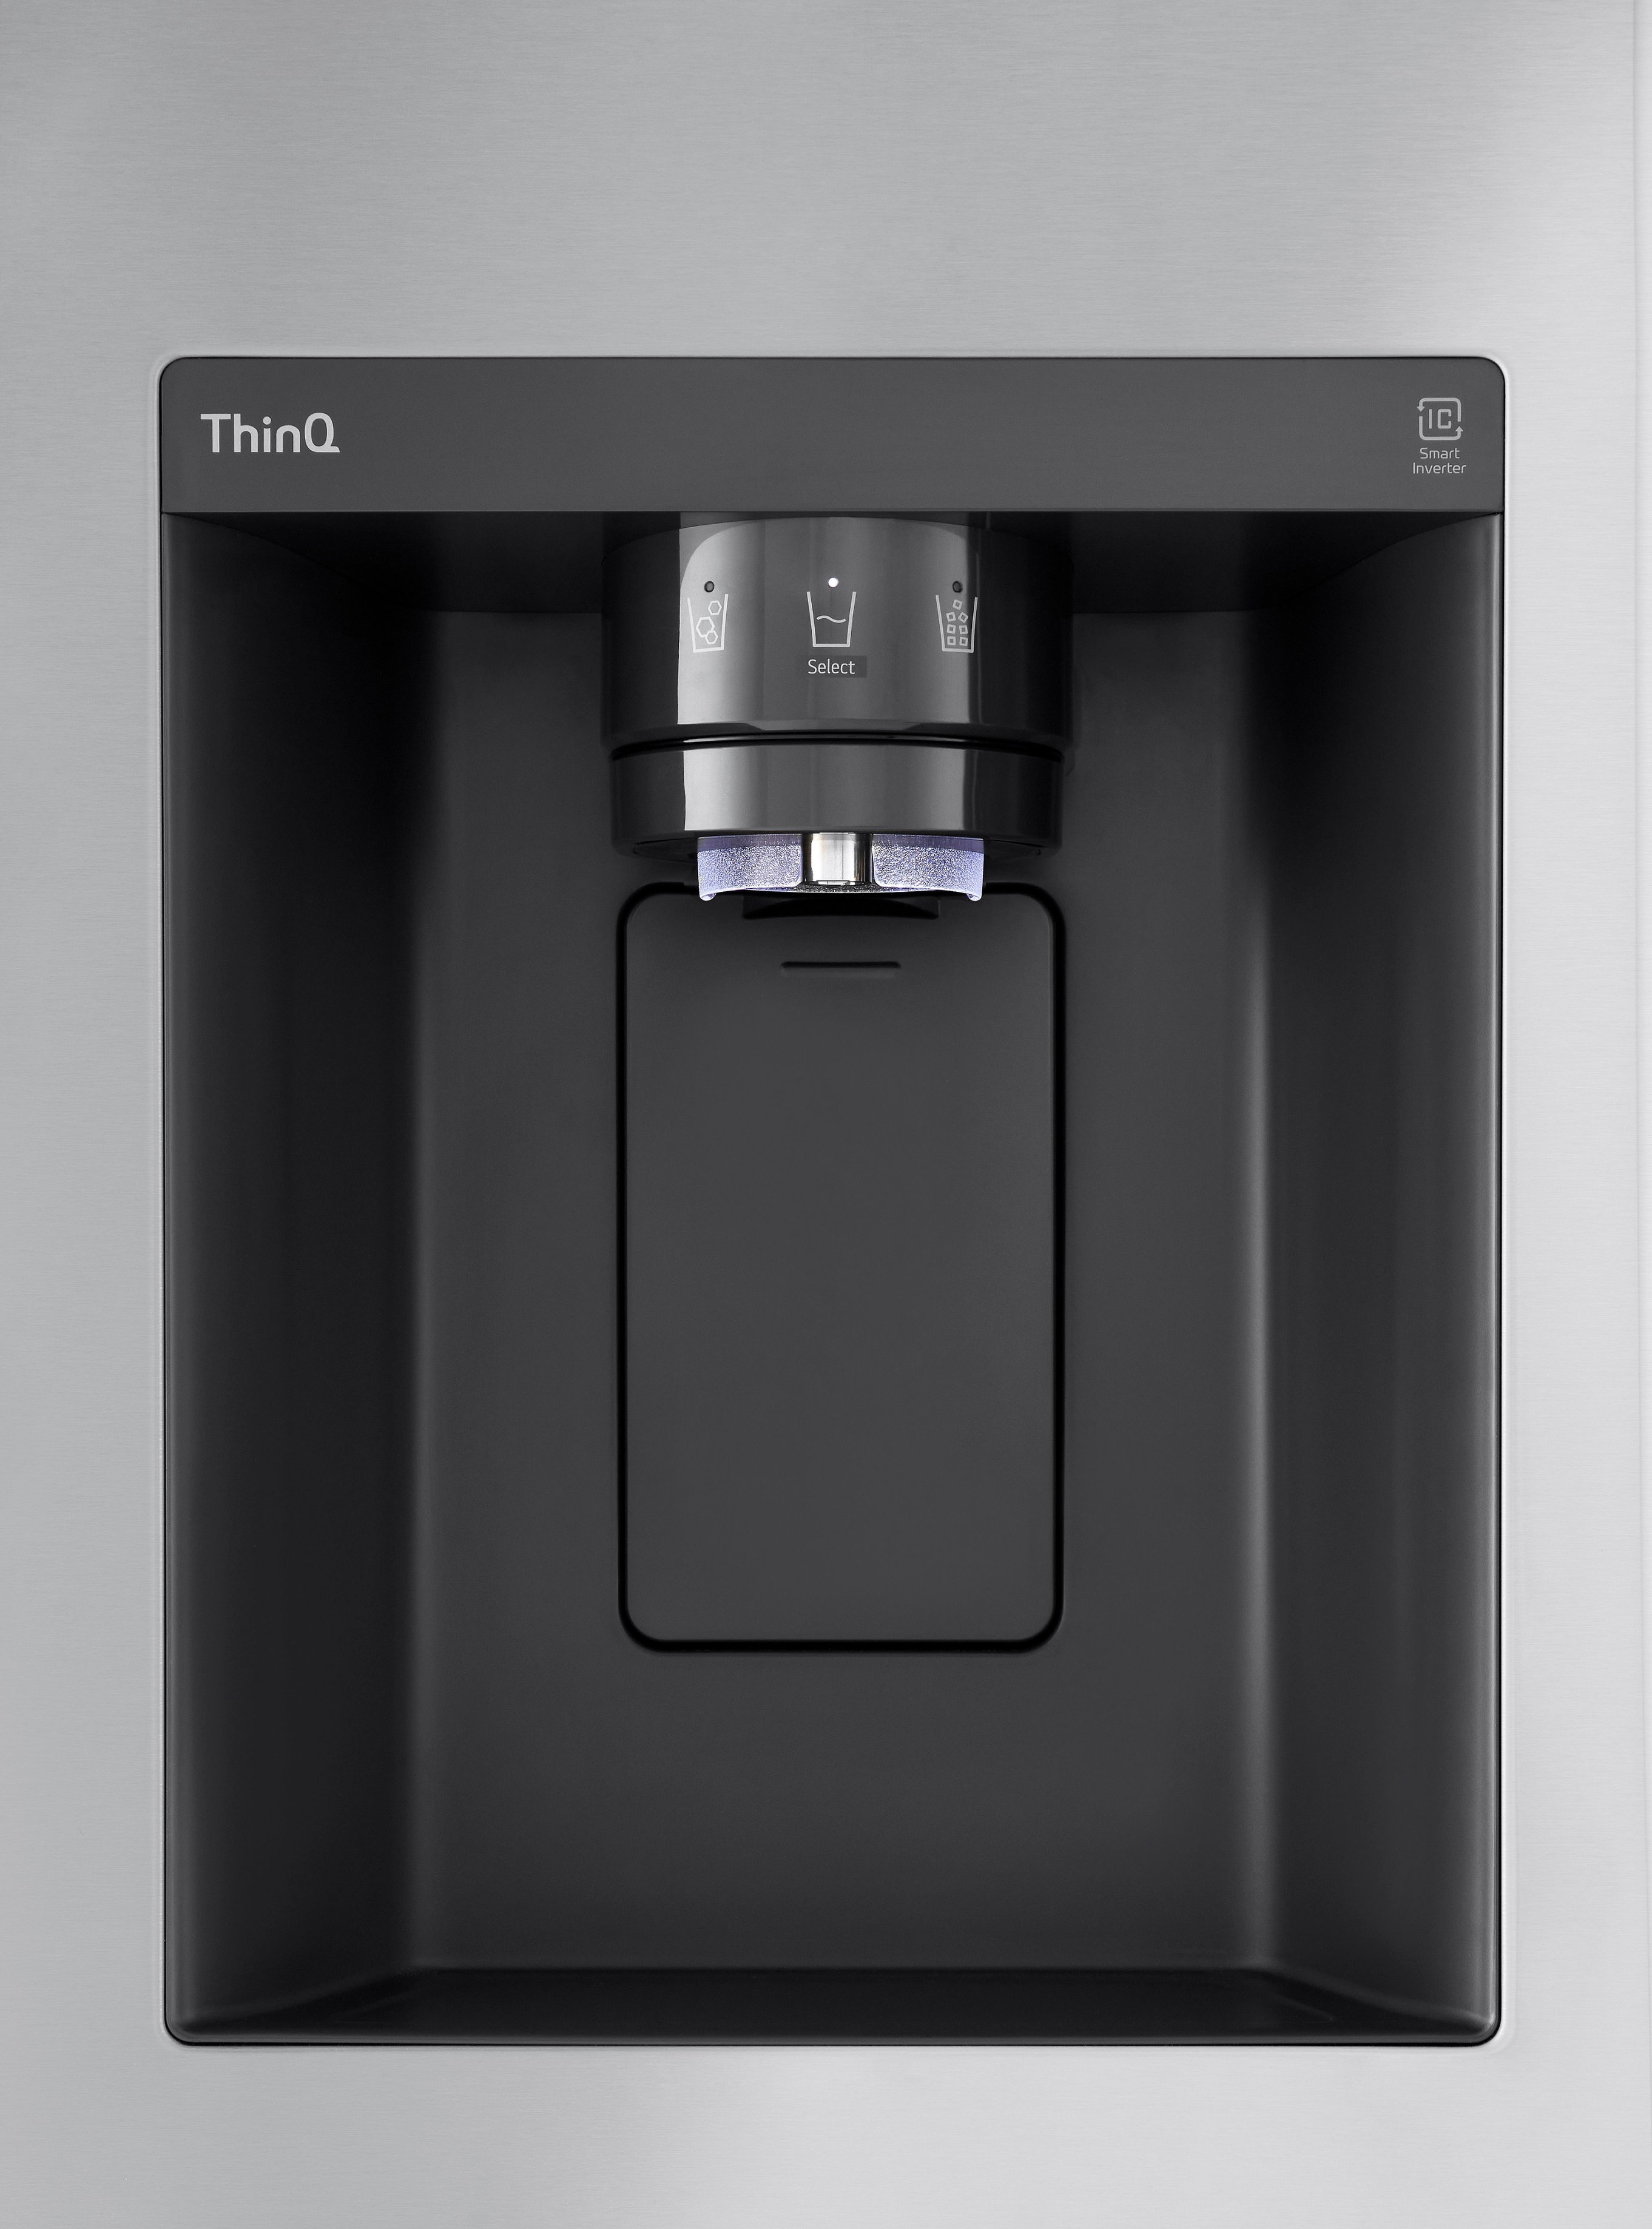 26 cu. ft. Counter-Depth MAX™ Refrigerator - LRFXC2606S